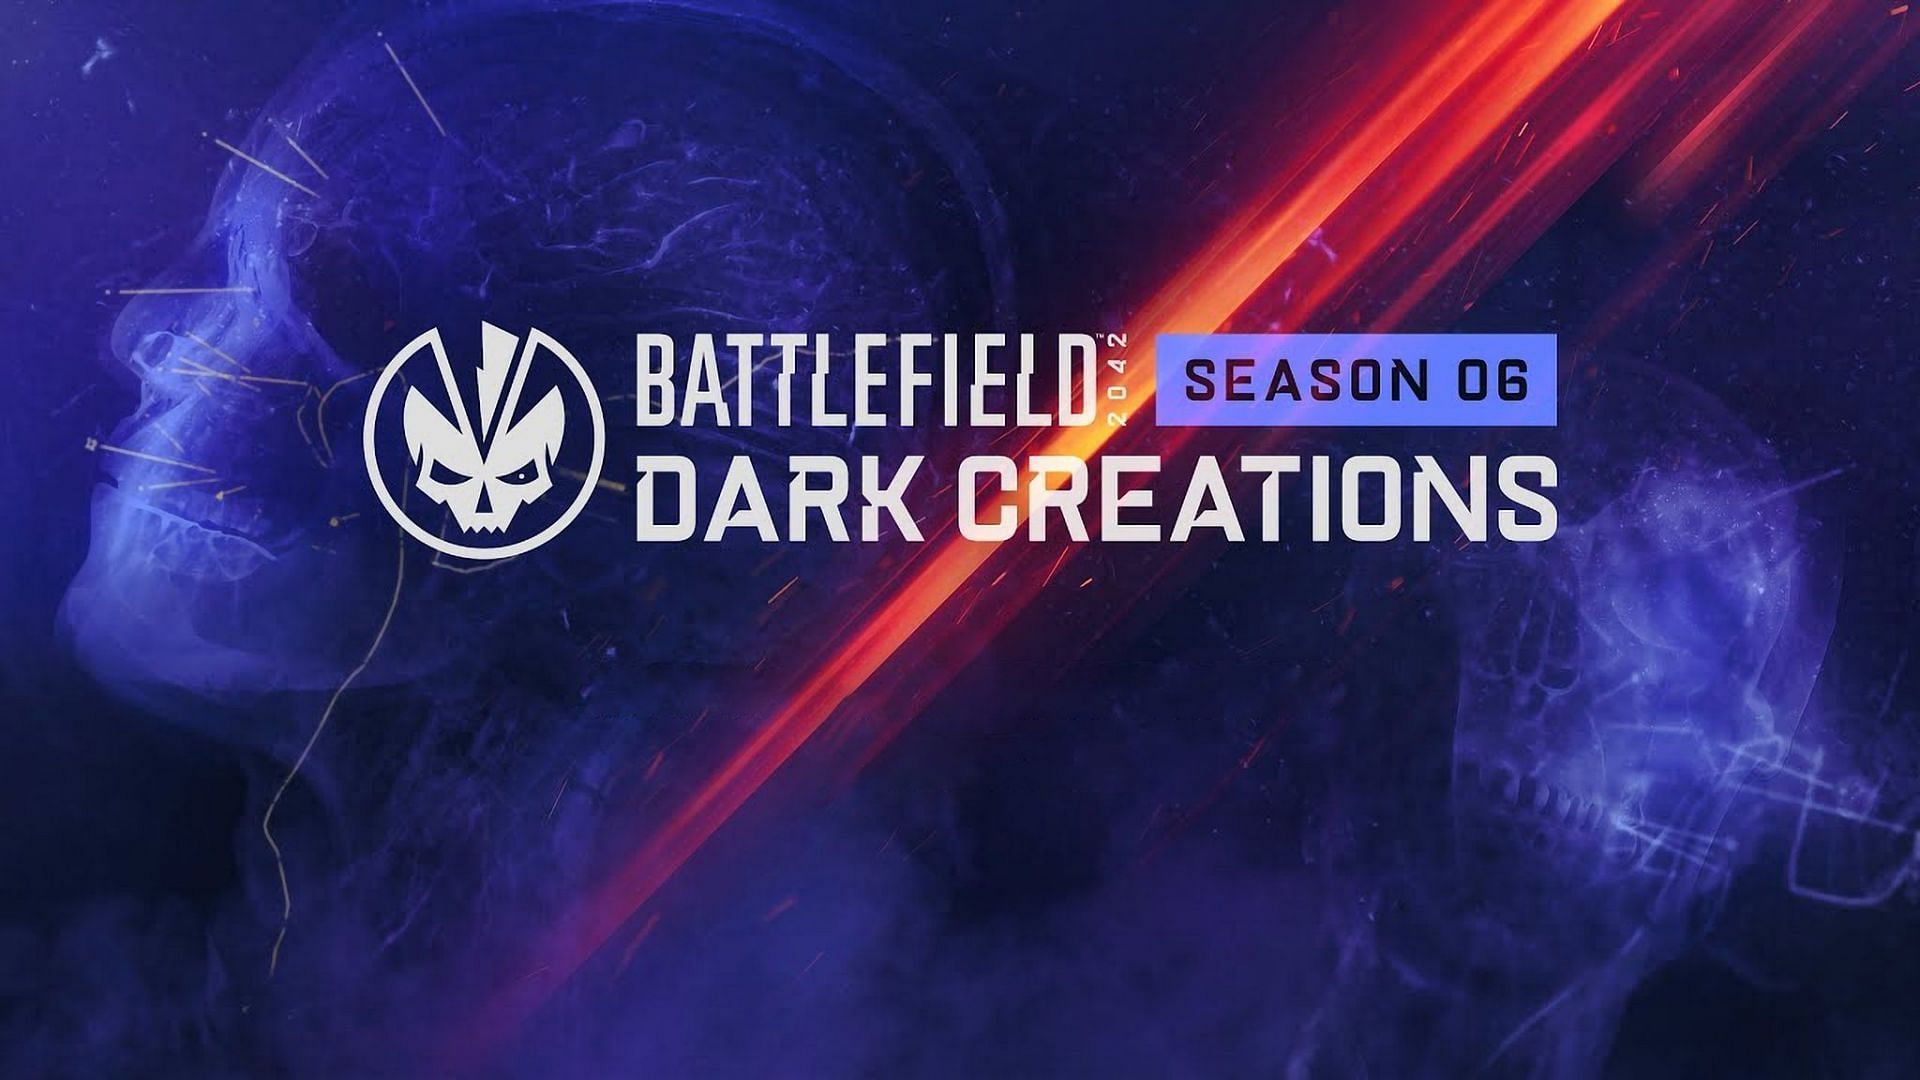 Battlefield 2042 Season 6: Dark Creations (Image via EA)